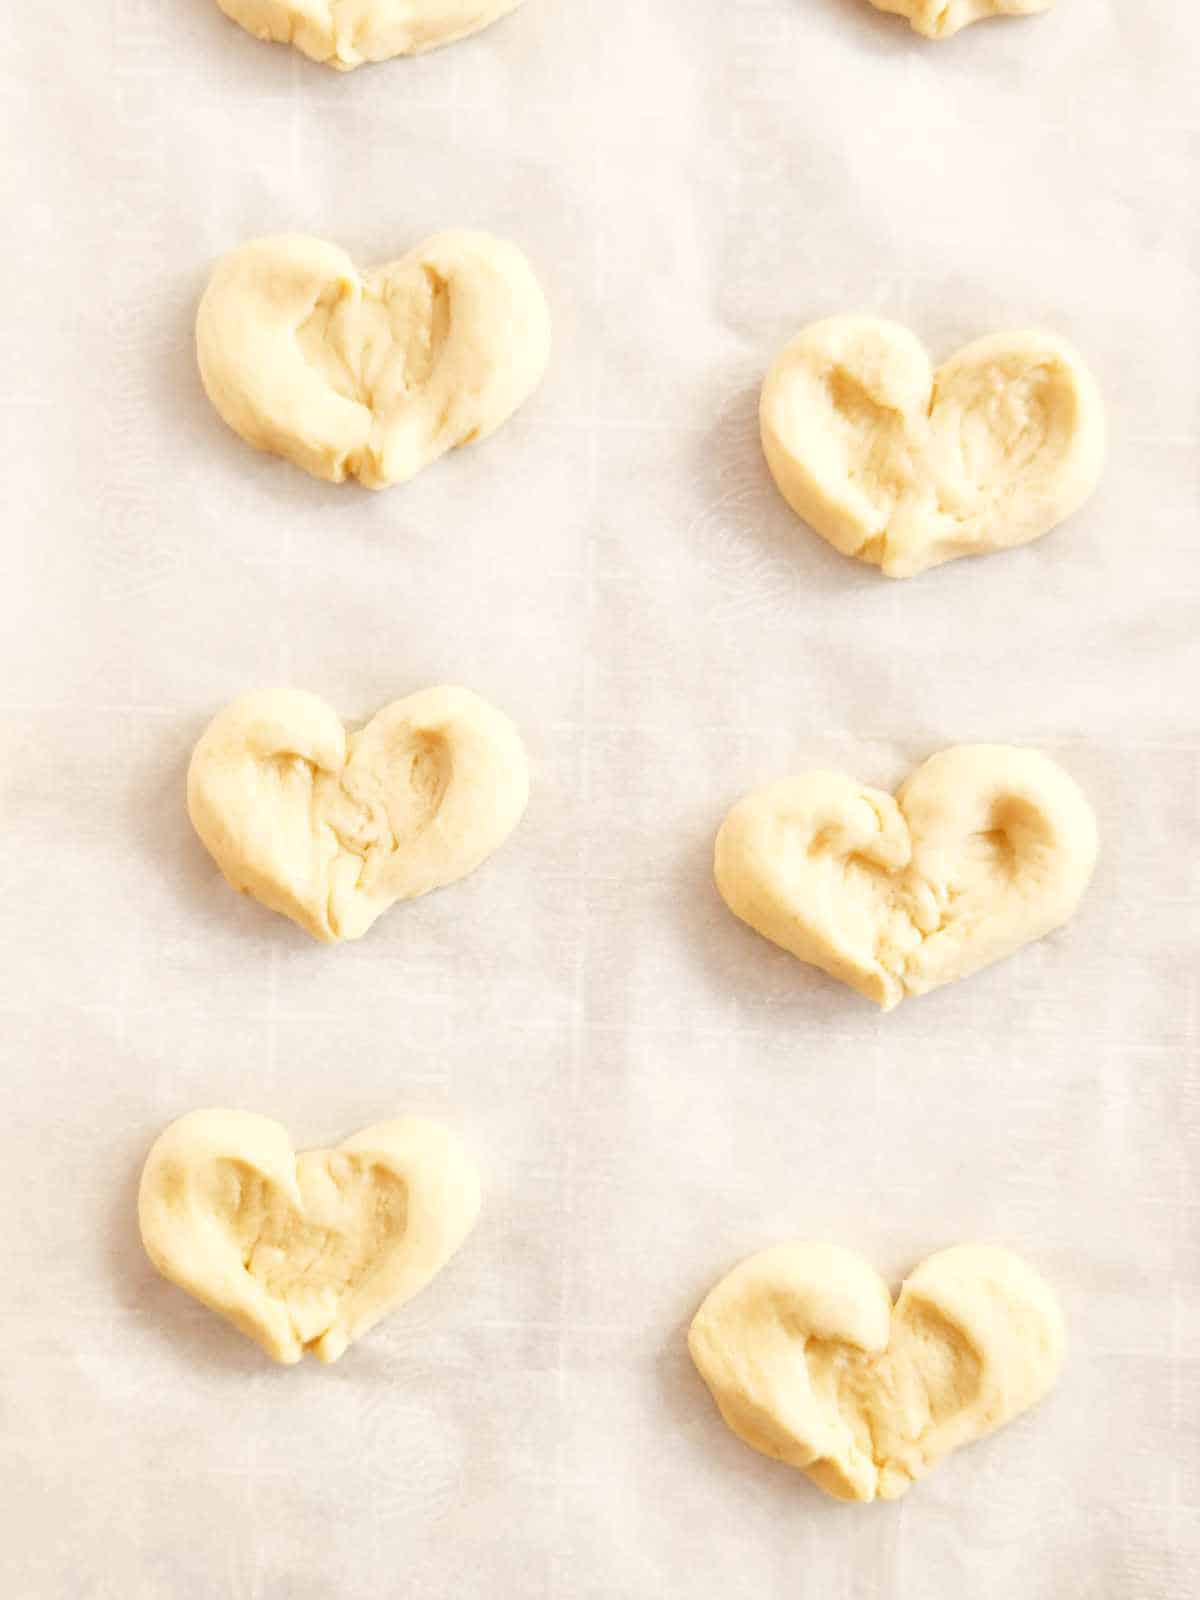 breakfast cheese danish shaped like hearts on a baking pan.